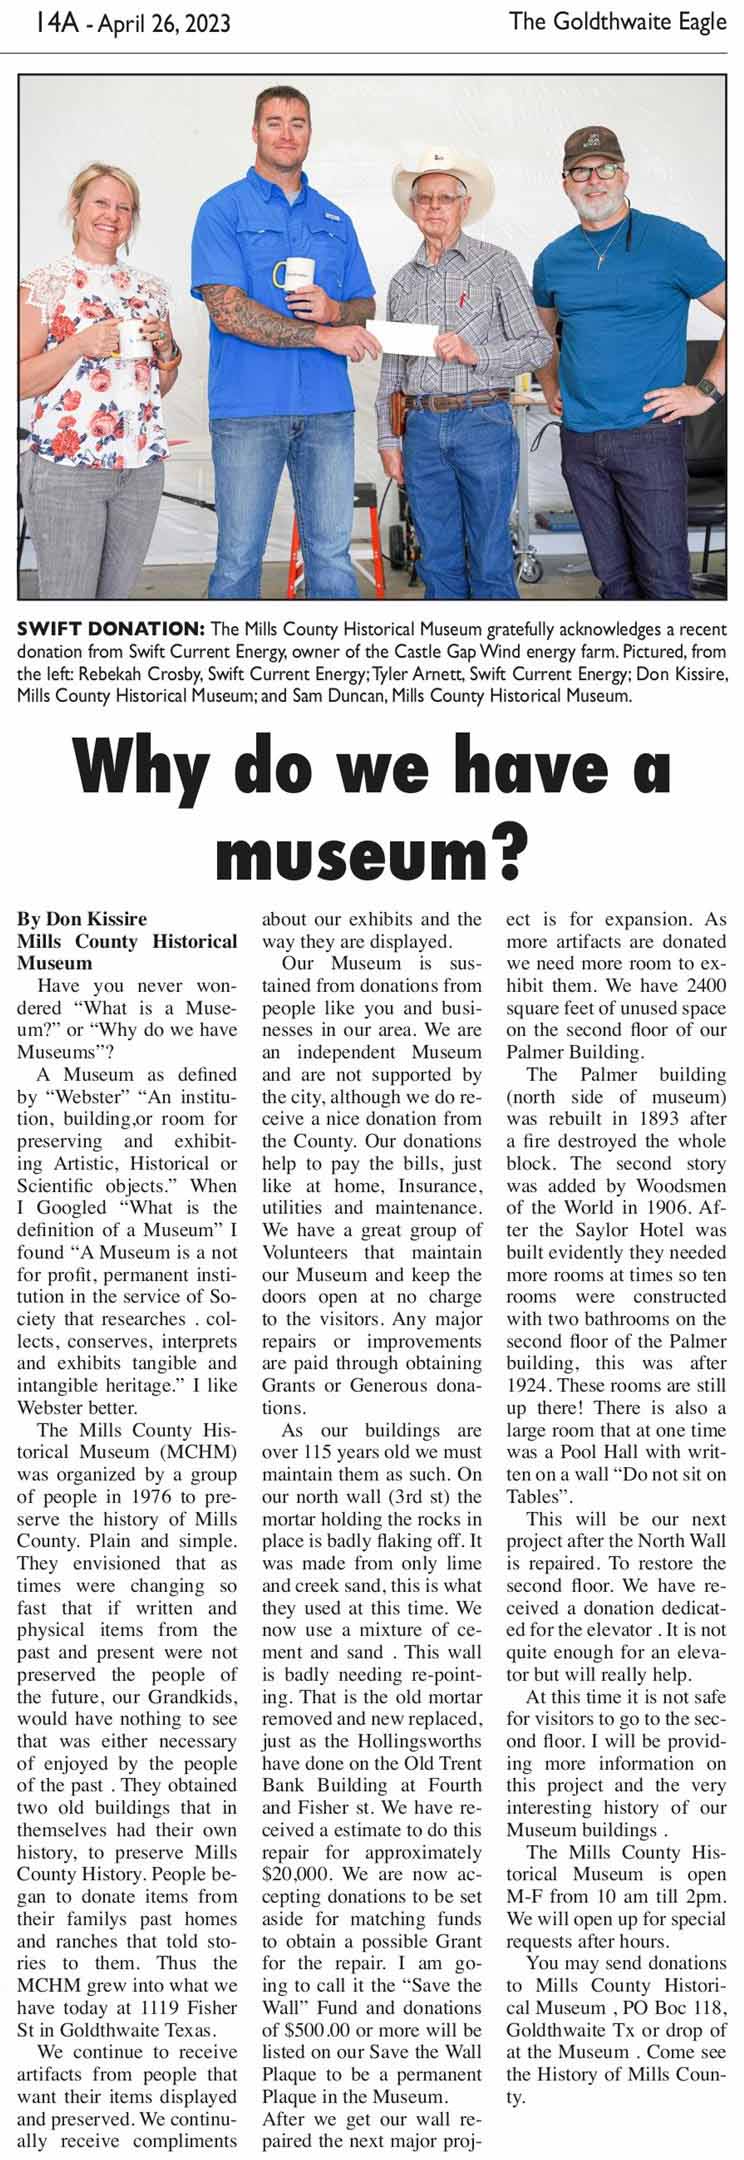 Museum seeking donations